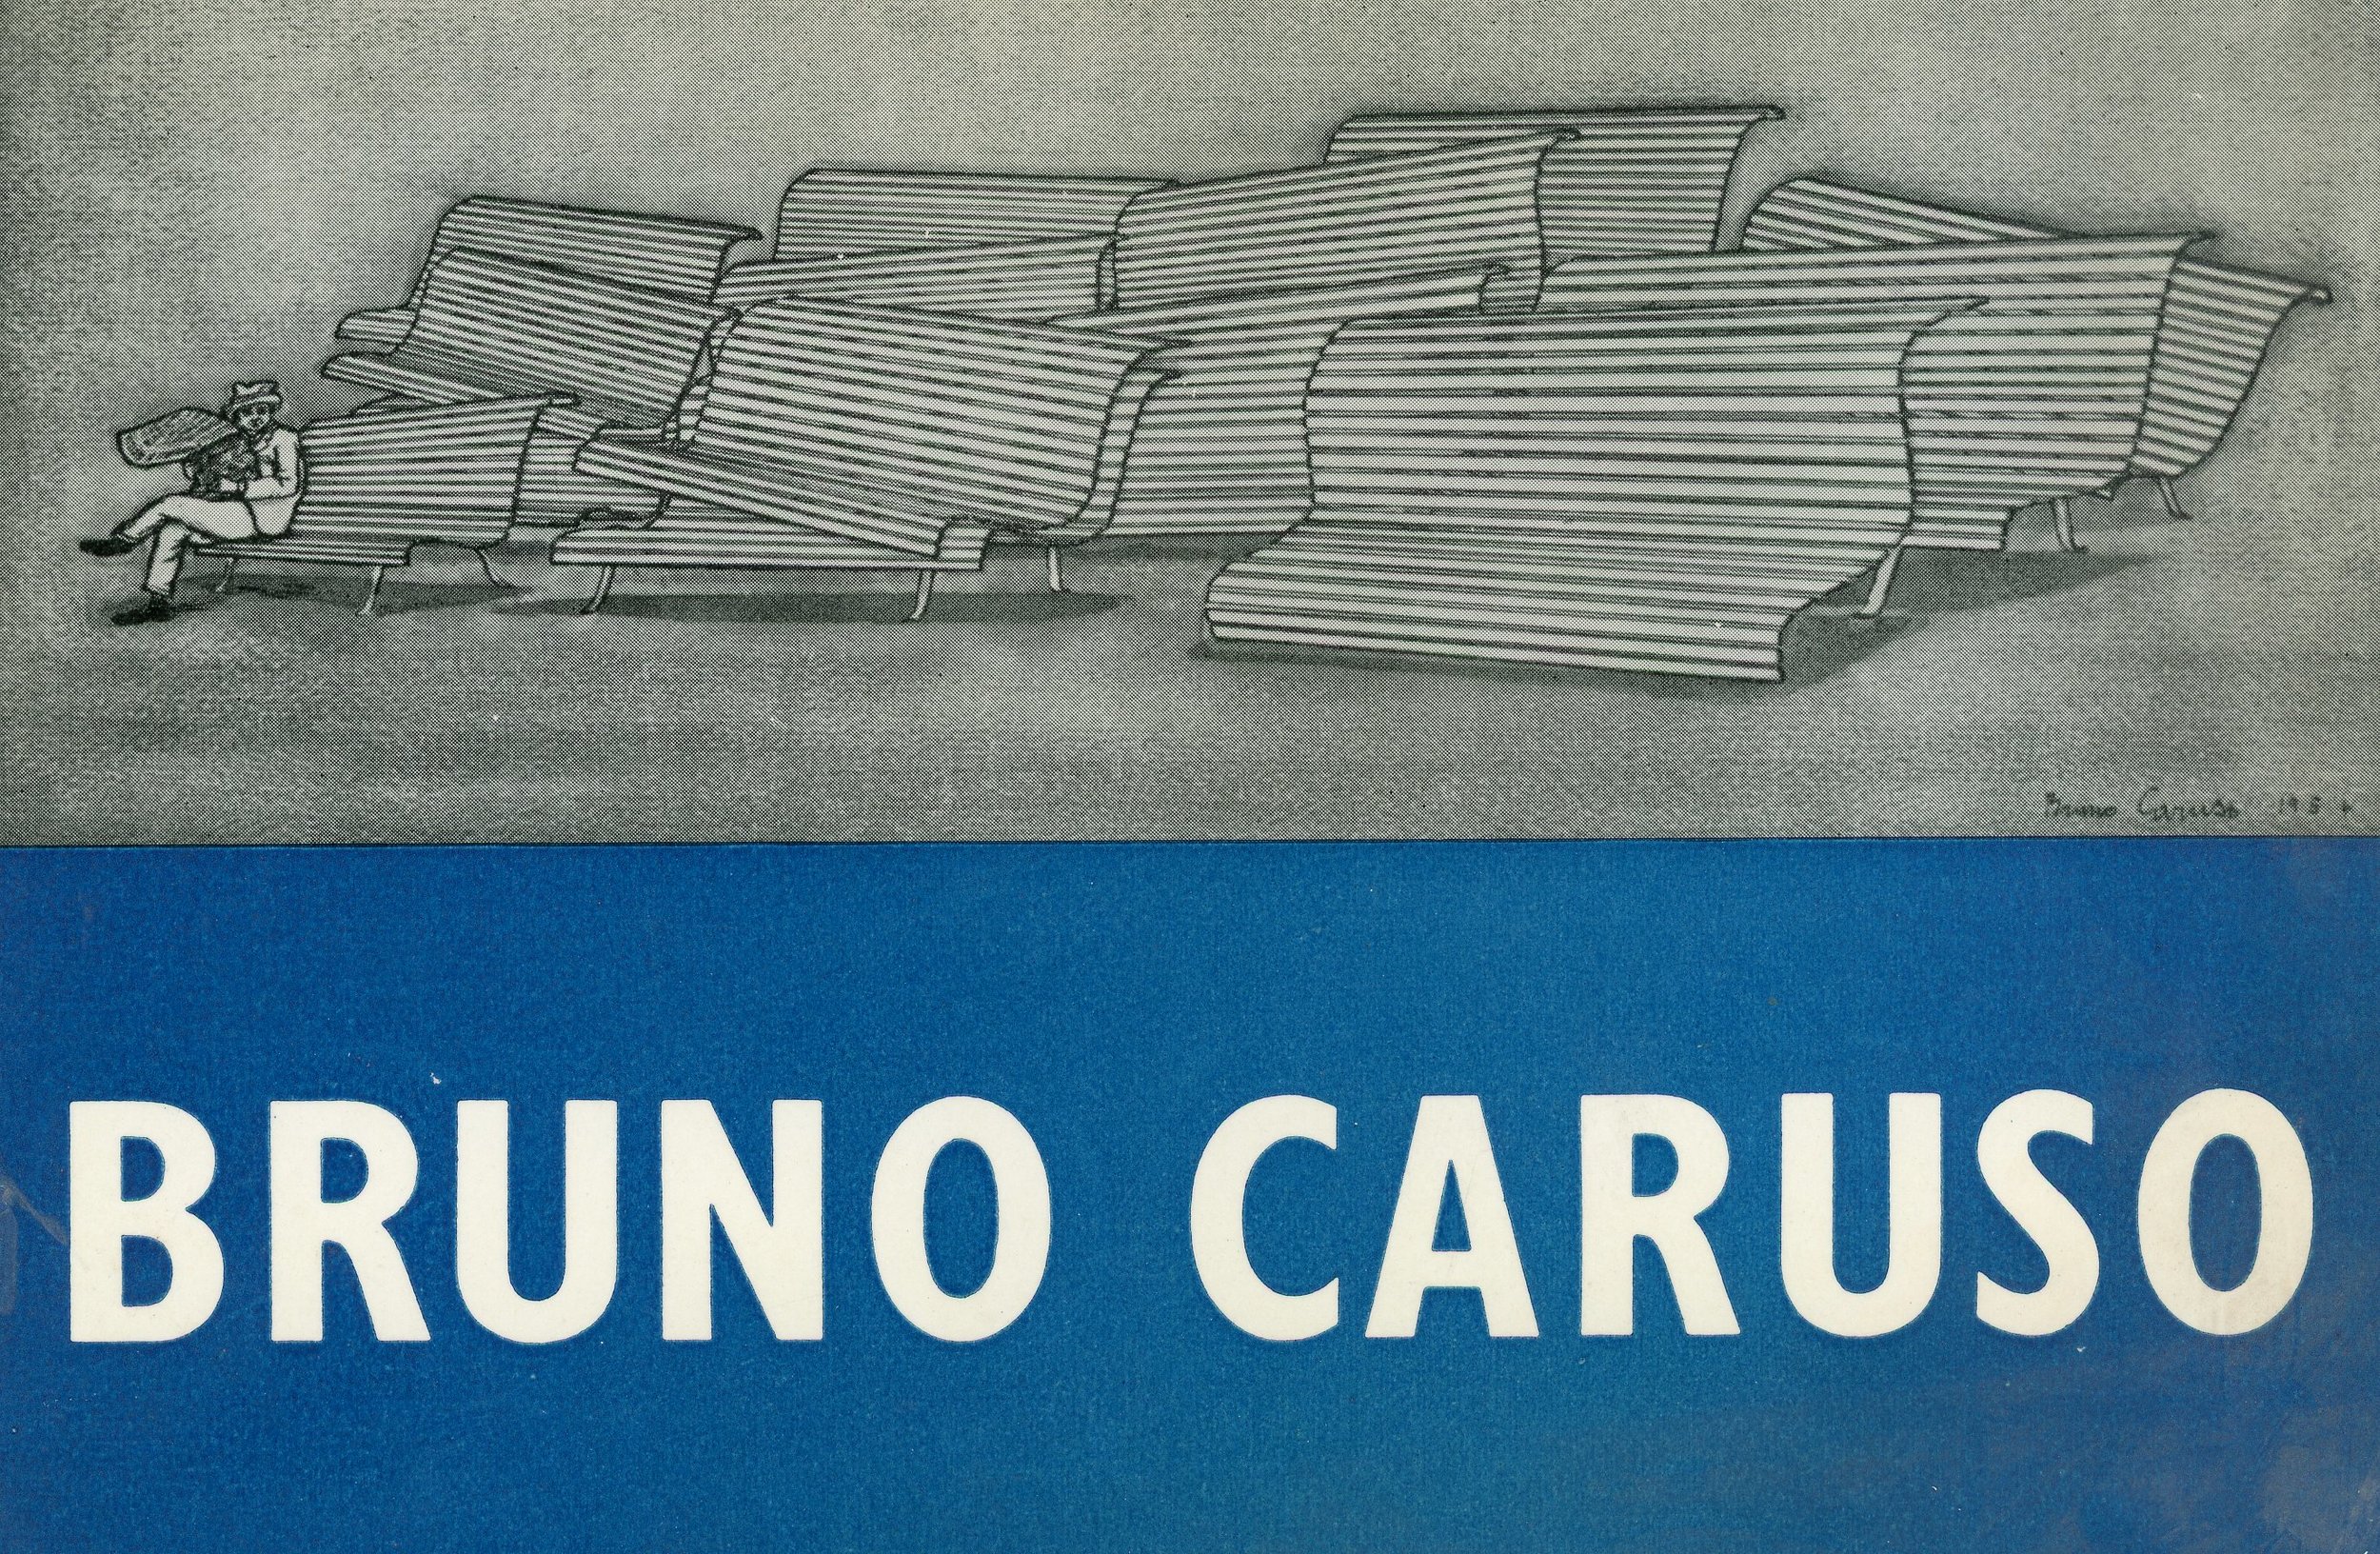 1955-10 Arthur Jeffress - Bruno Caruso_01.jpg